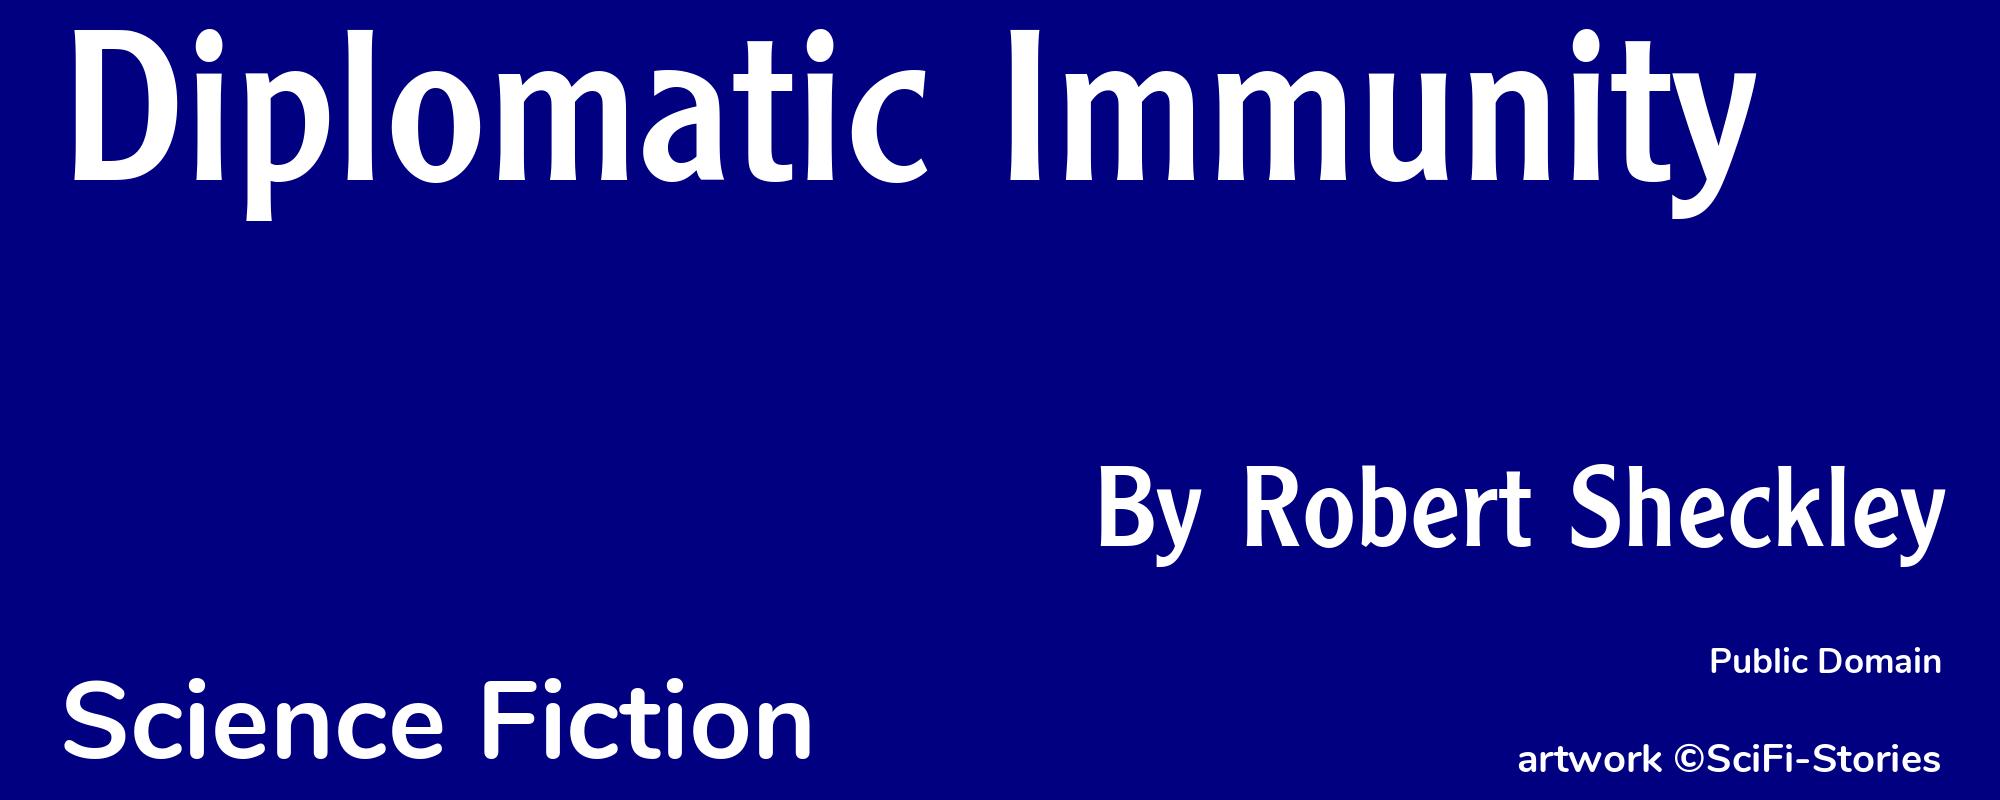 Diplomatic Immunity - Cover